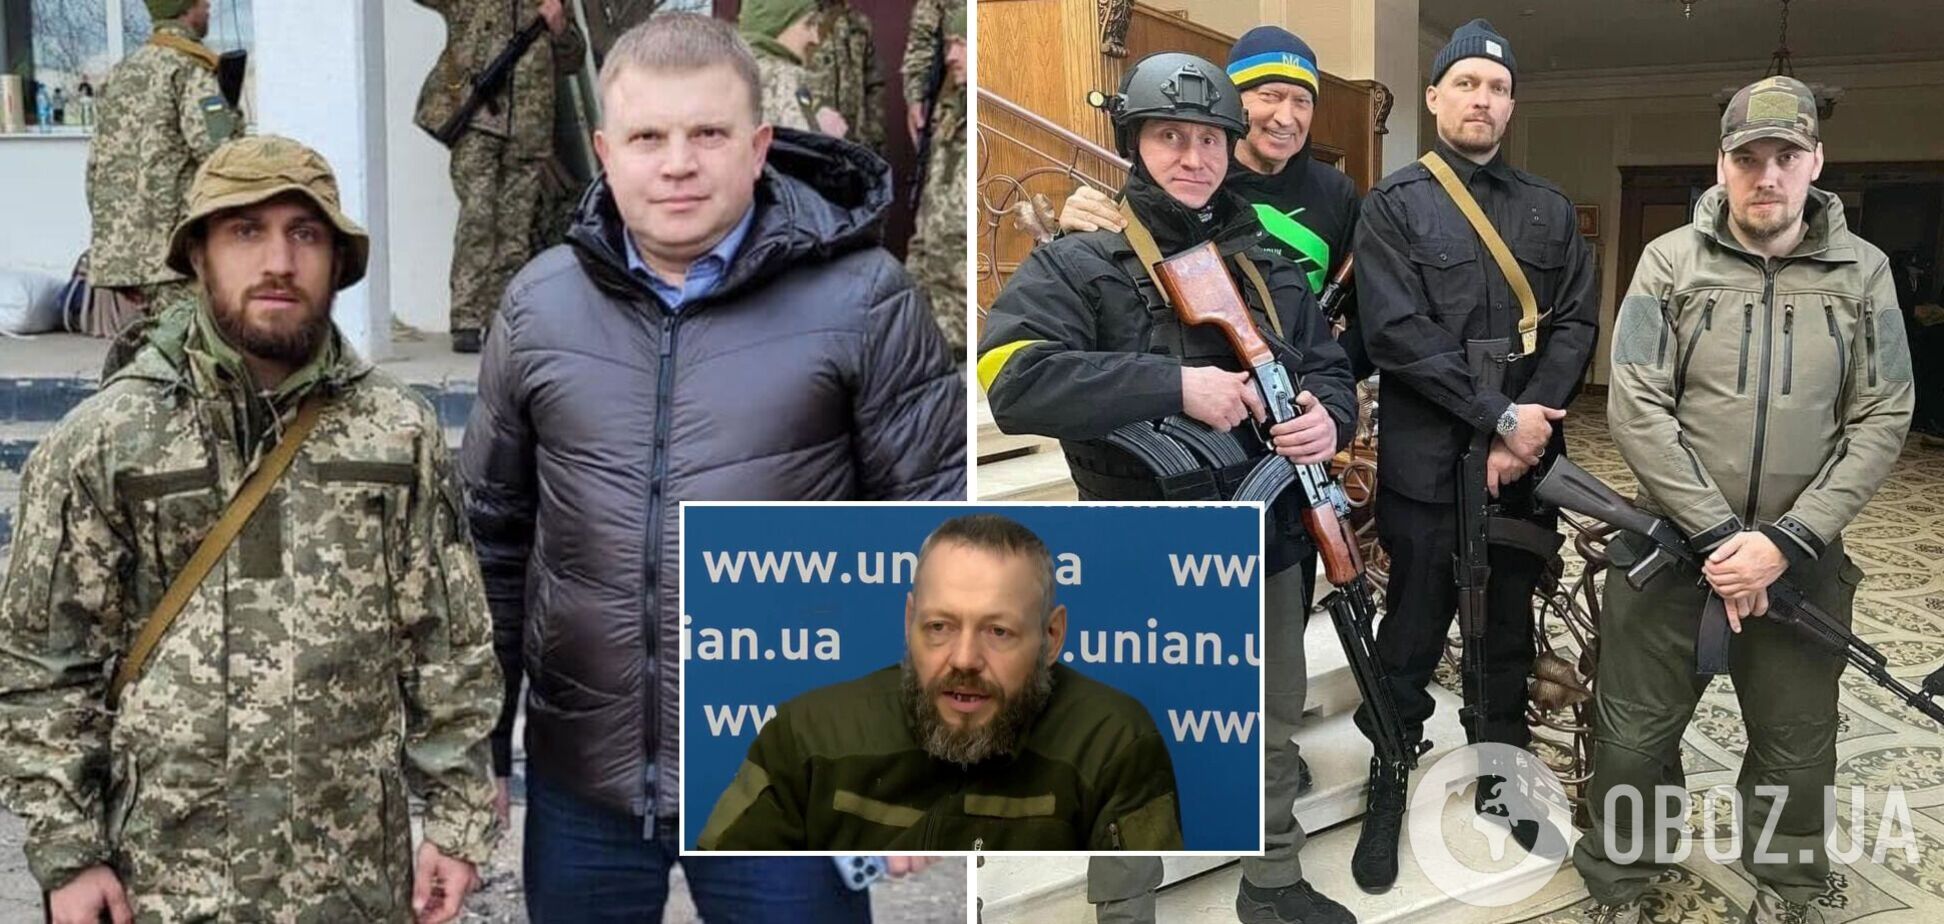 Олександр Усик та Василь Ломаченко захищають Україну